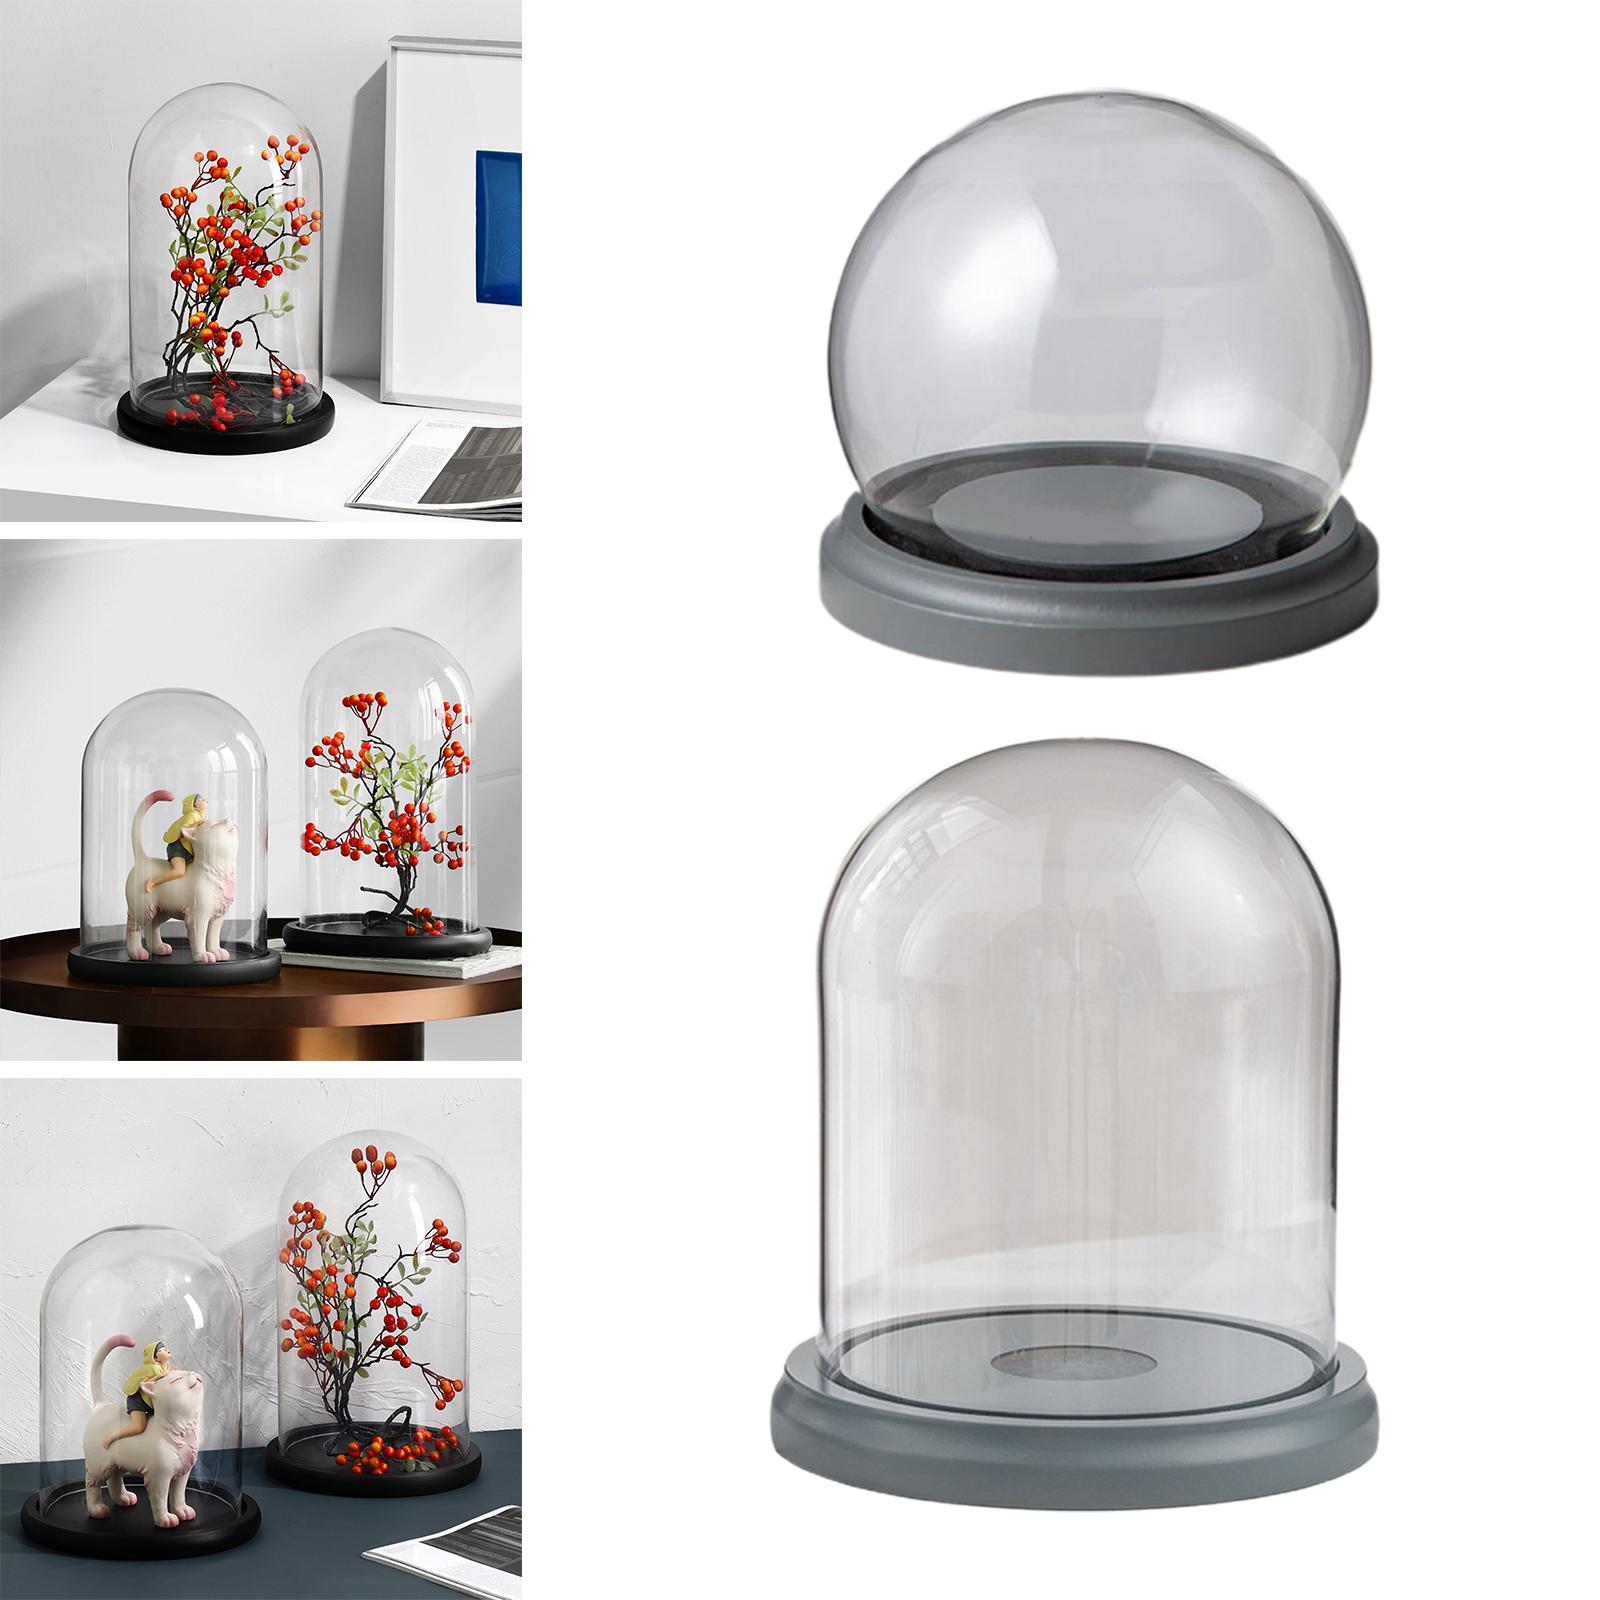 Decorative Clear Glass Dome Tabletop Decor Showcase Cover for Countertops A